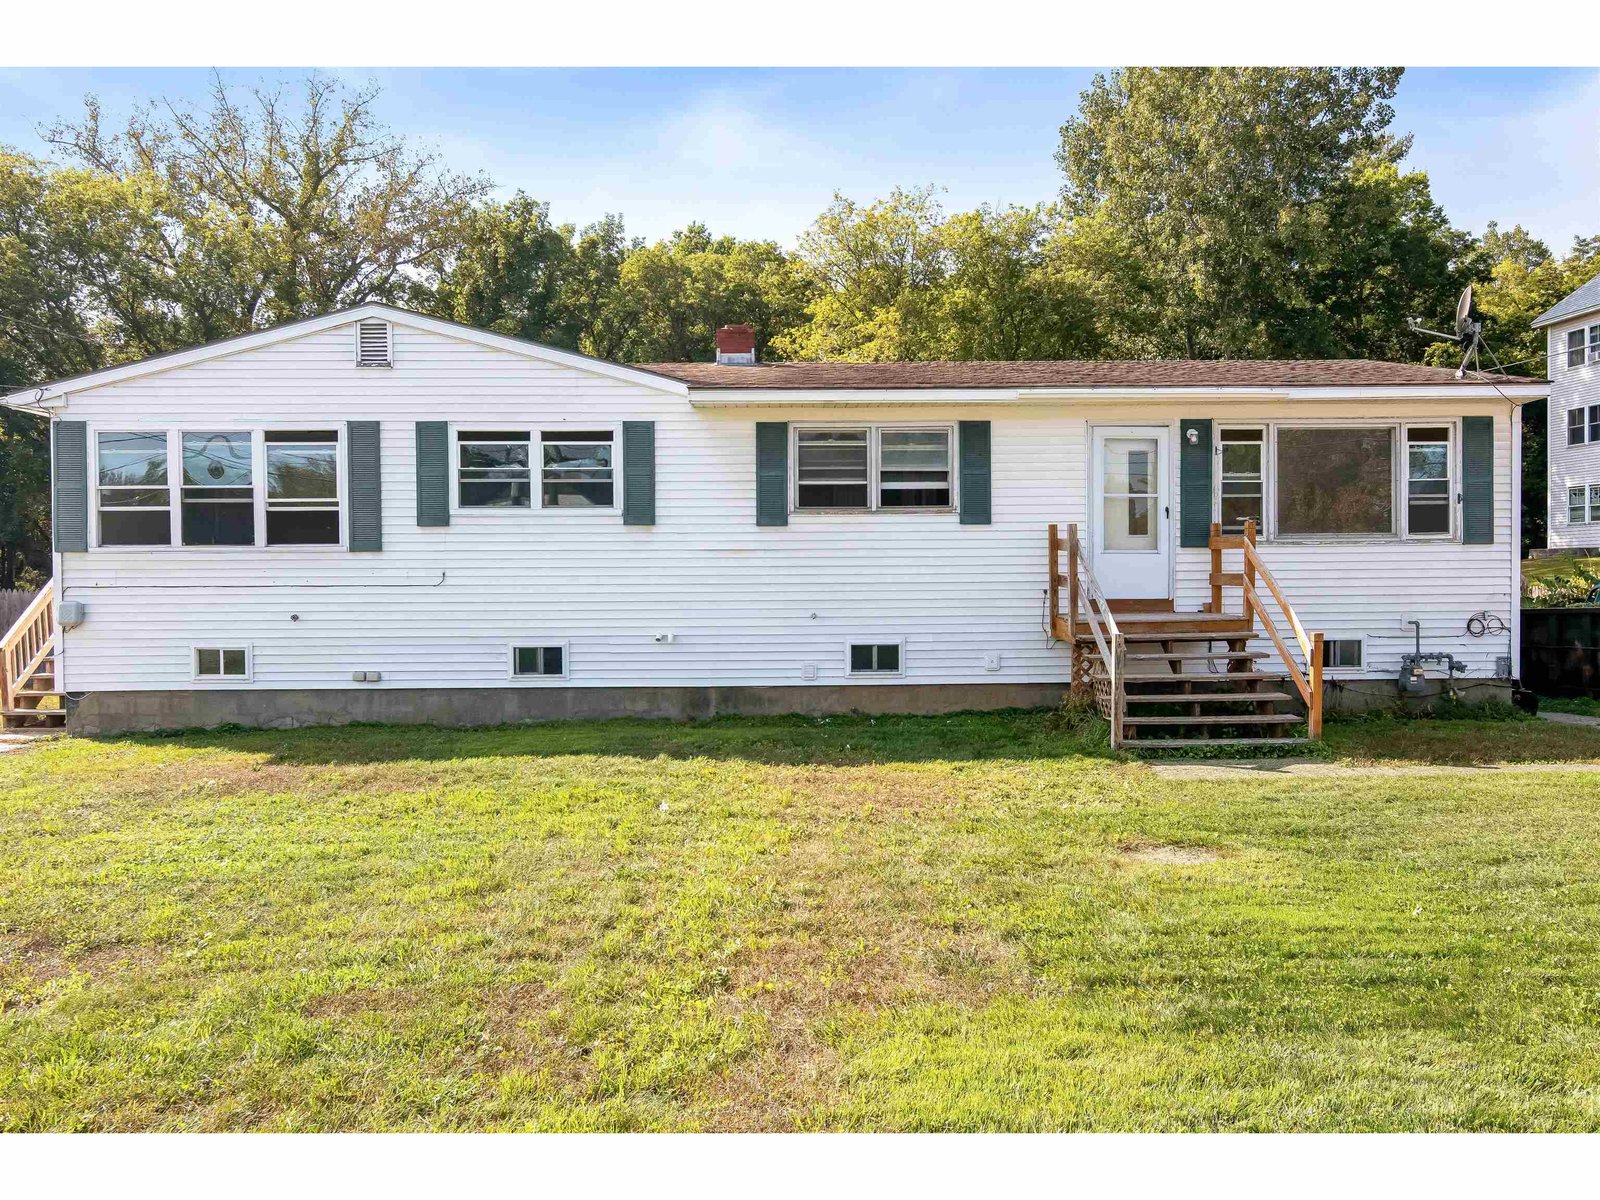 Sold property in South Burlington